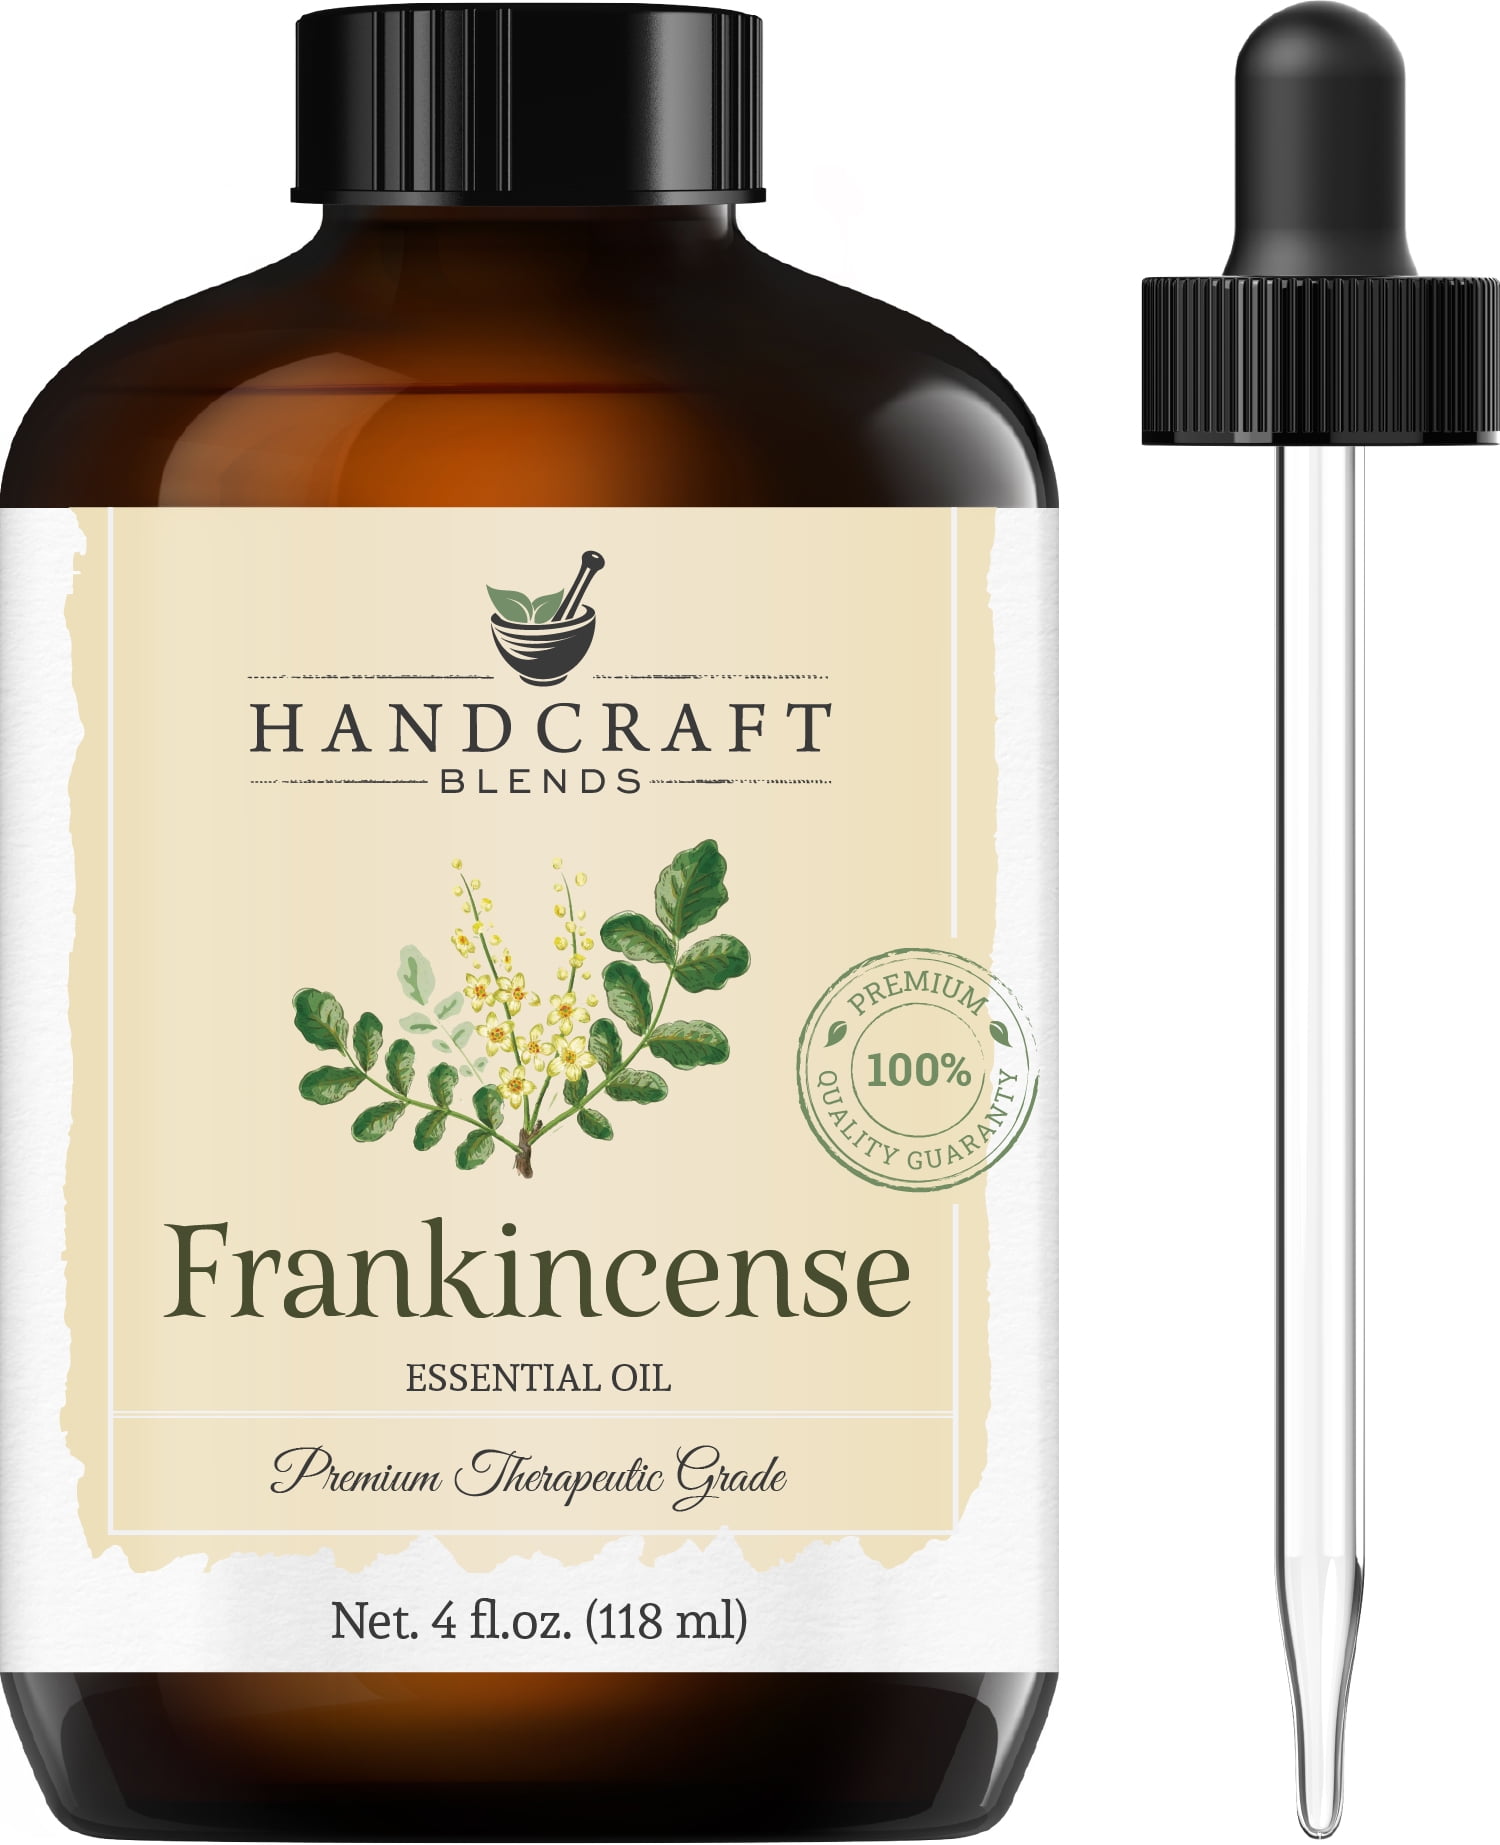 Frankincense Oil (5ml) — Liv Holistic